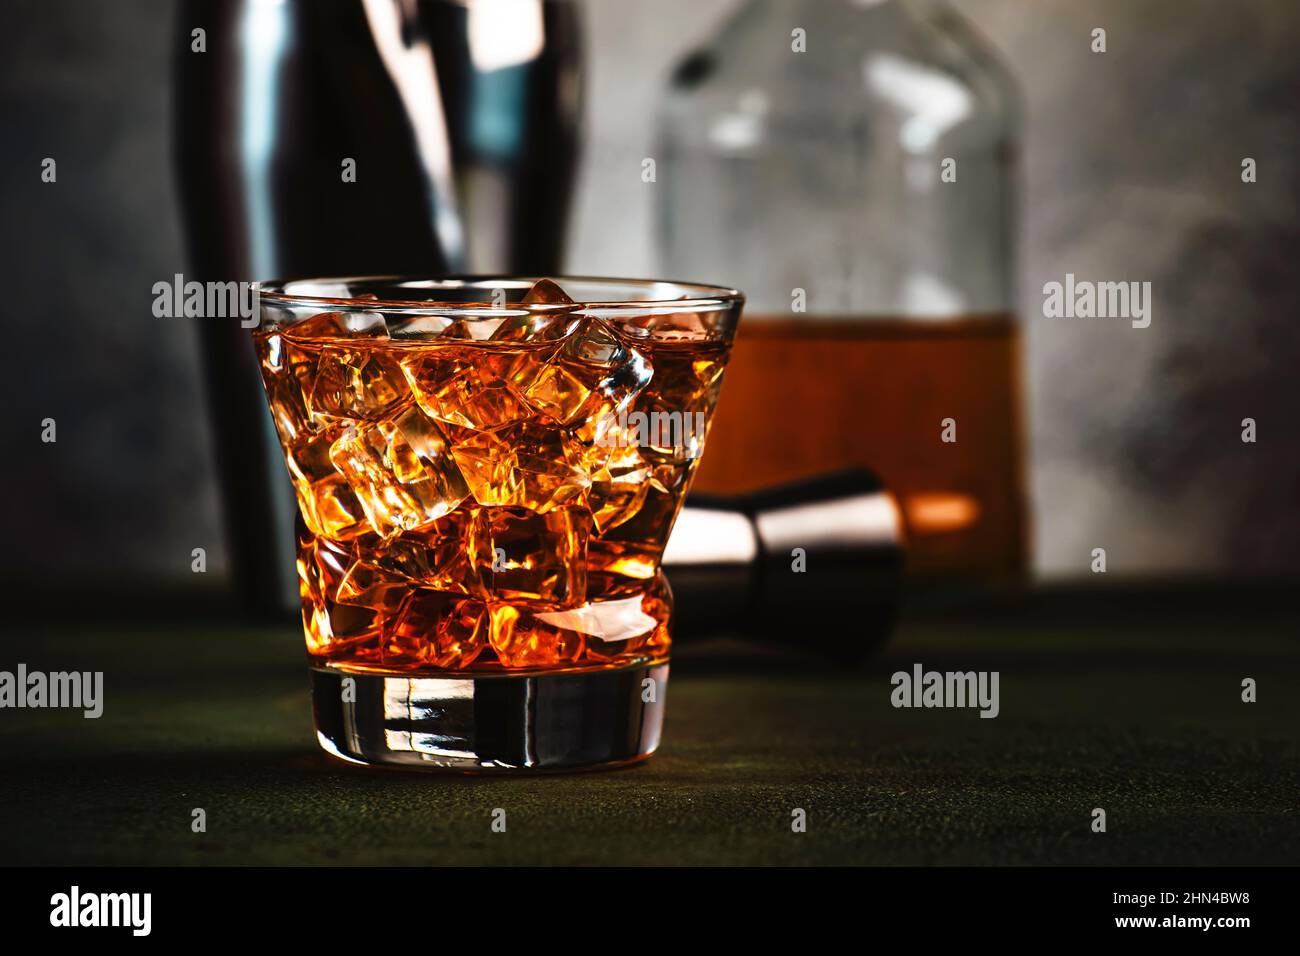 Cóctel alcohólico padrino con whisky escocés, licor de amaretto hielo. Fondo de barra oscura, herramientas de barra, espacio de copia Fotografía de stock Alamy